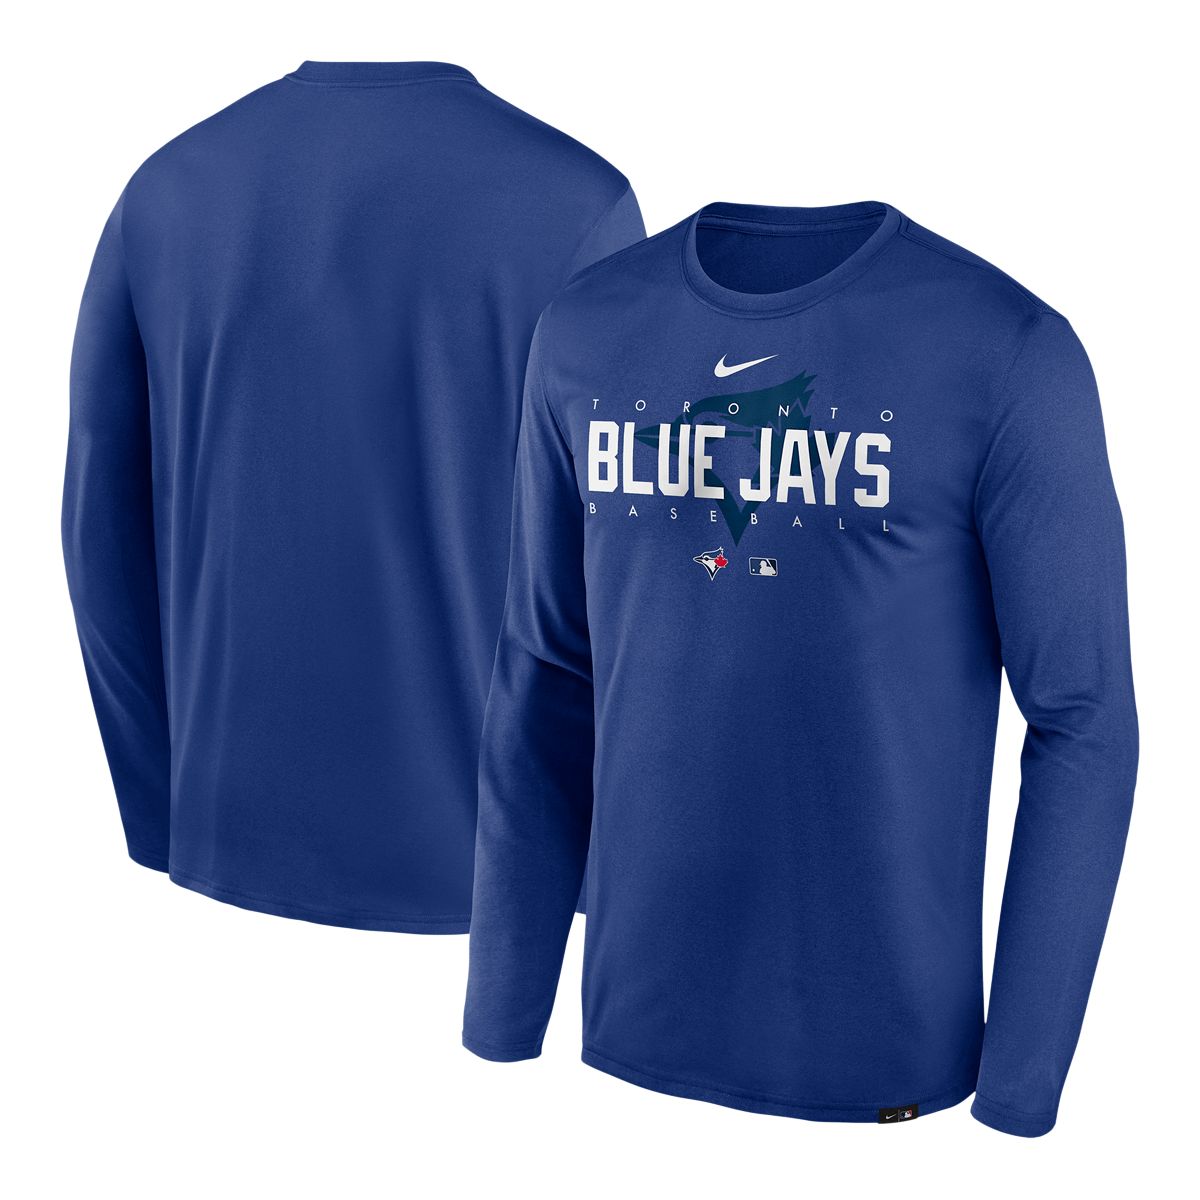 Blue Jays Baseball MLB Nike Team Issued Shirt